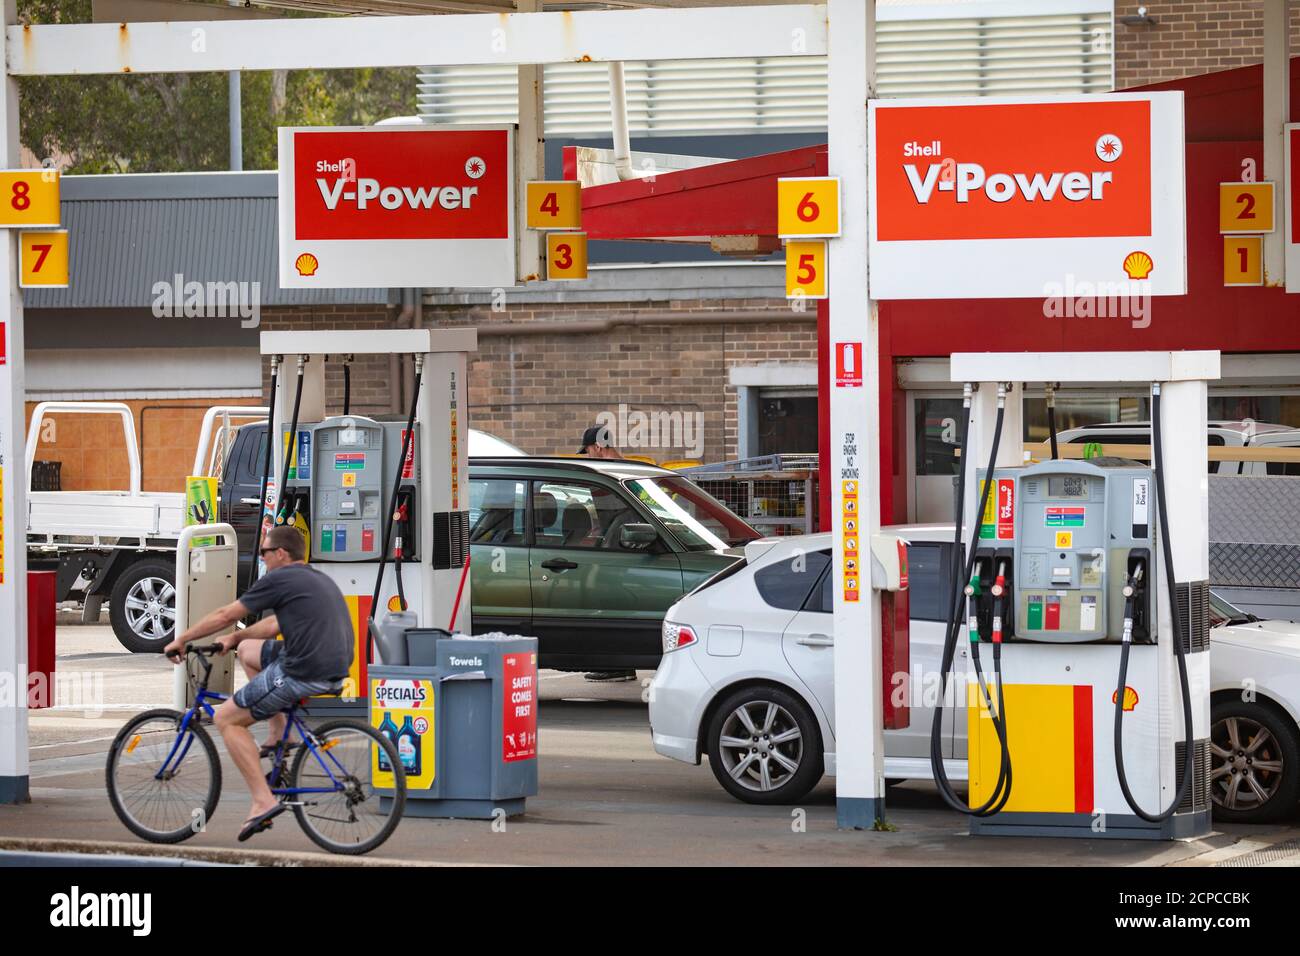 Shell fuel petrol station in Sydney,NSW,Australia Stock Photo